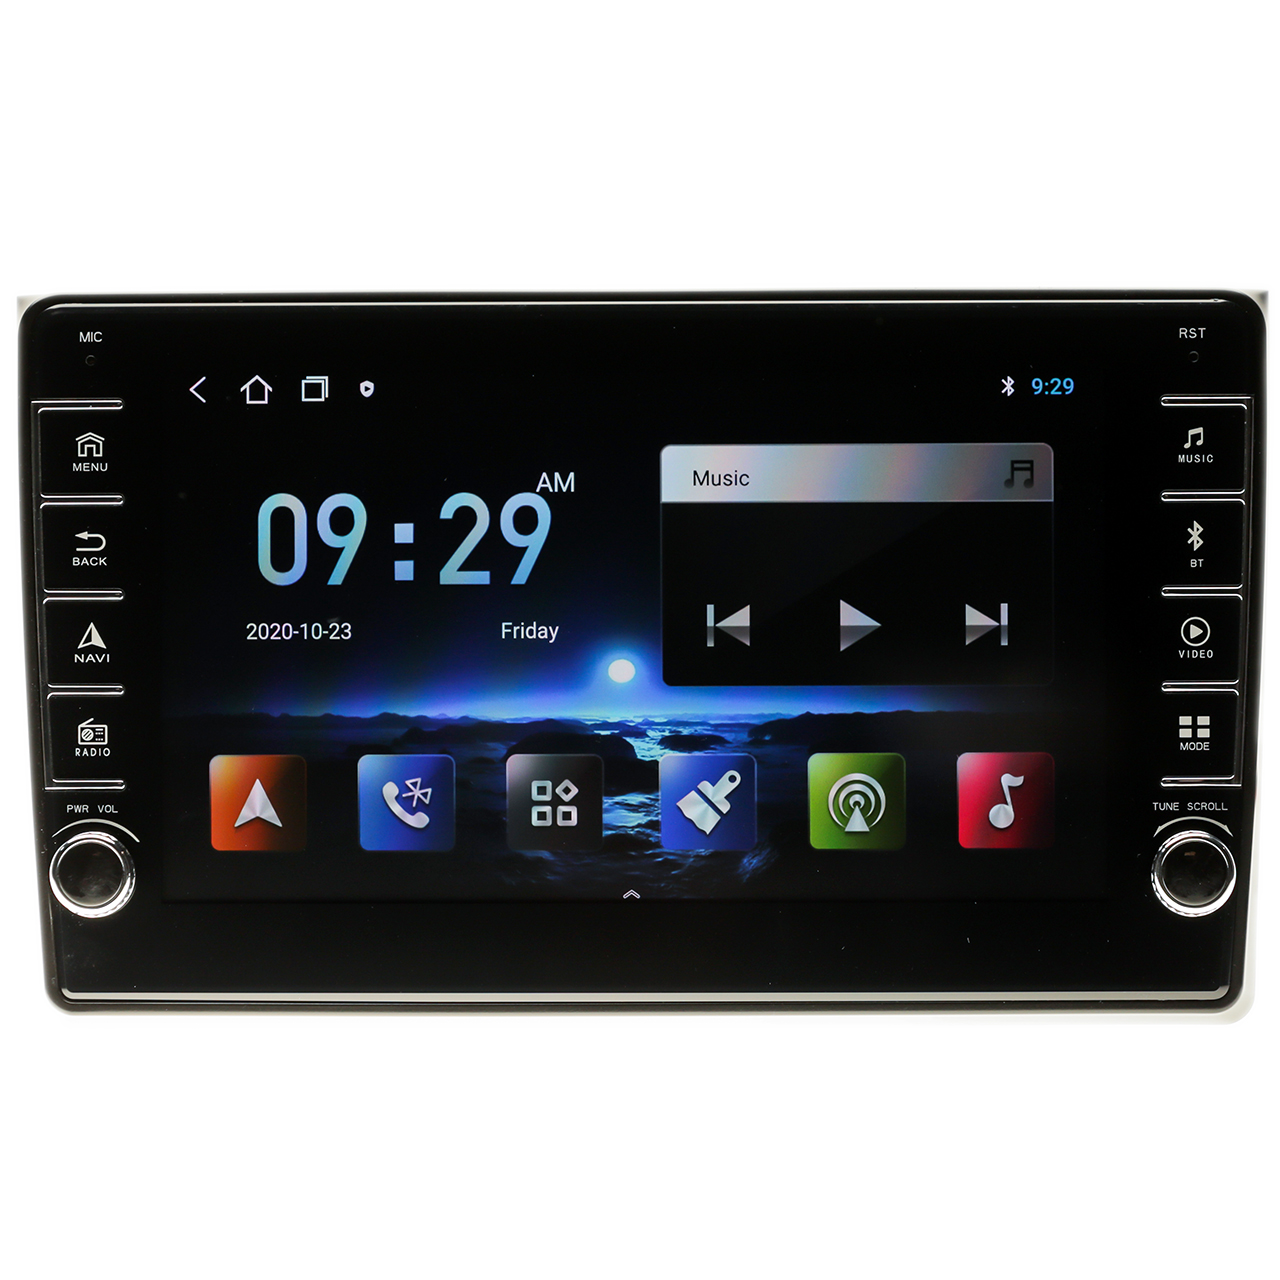 Navigatie AUTONAV ECO Android GPS Dedicata Audi A4 B6 si B7, Model PRO Memorie 16GB Stocare, 1GB DDR3 RAM, Butoane Laterale Si Regulator Volum, Display 8